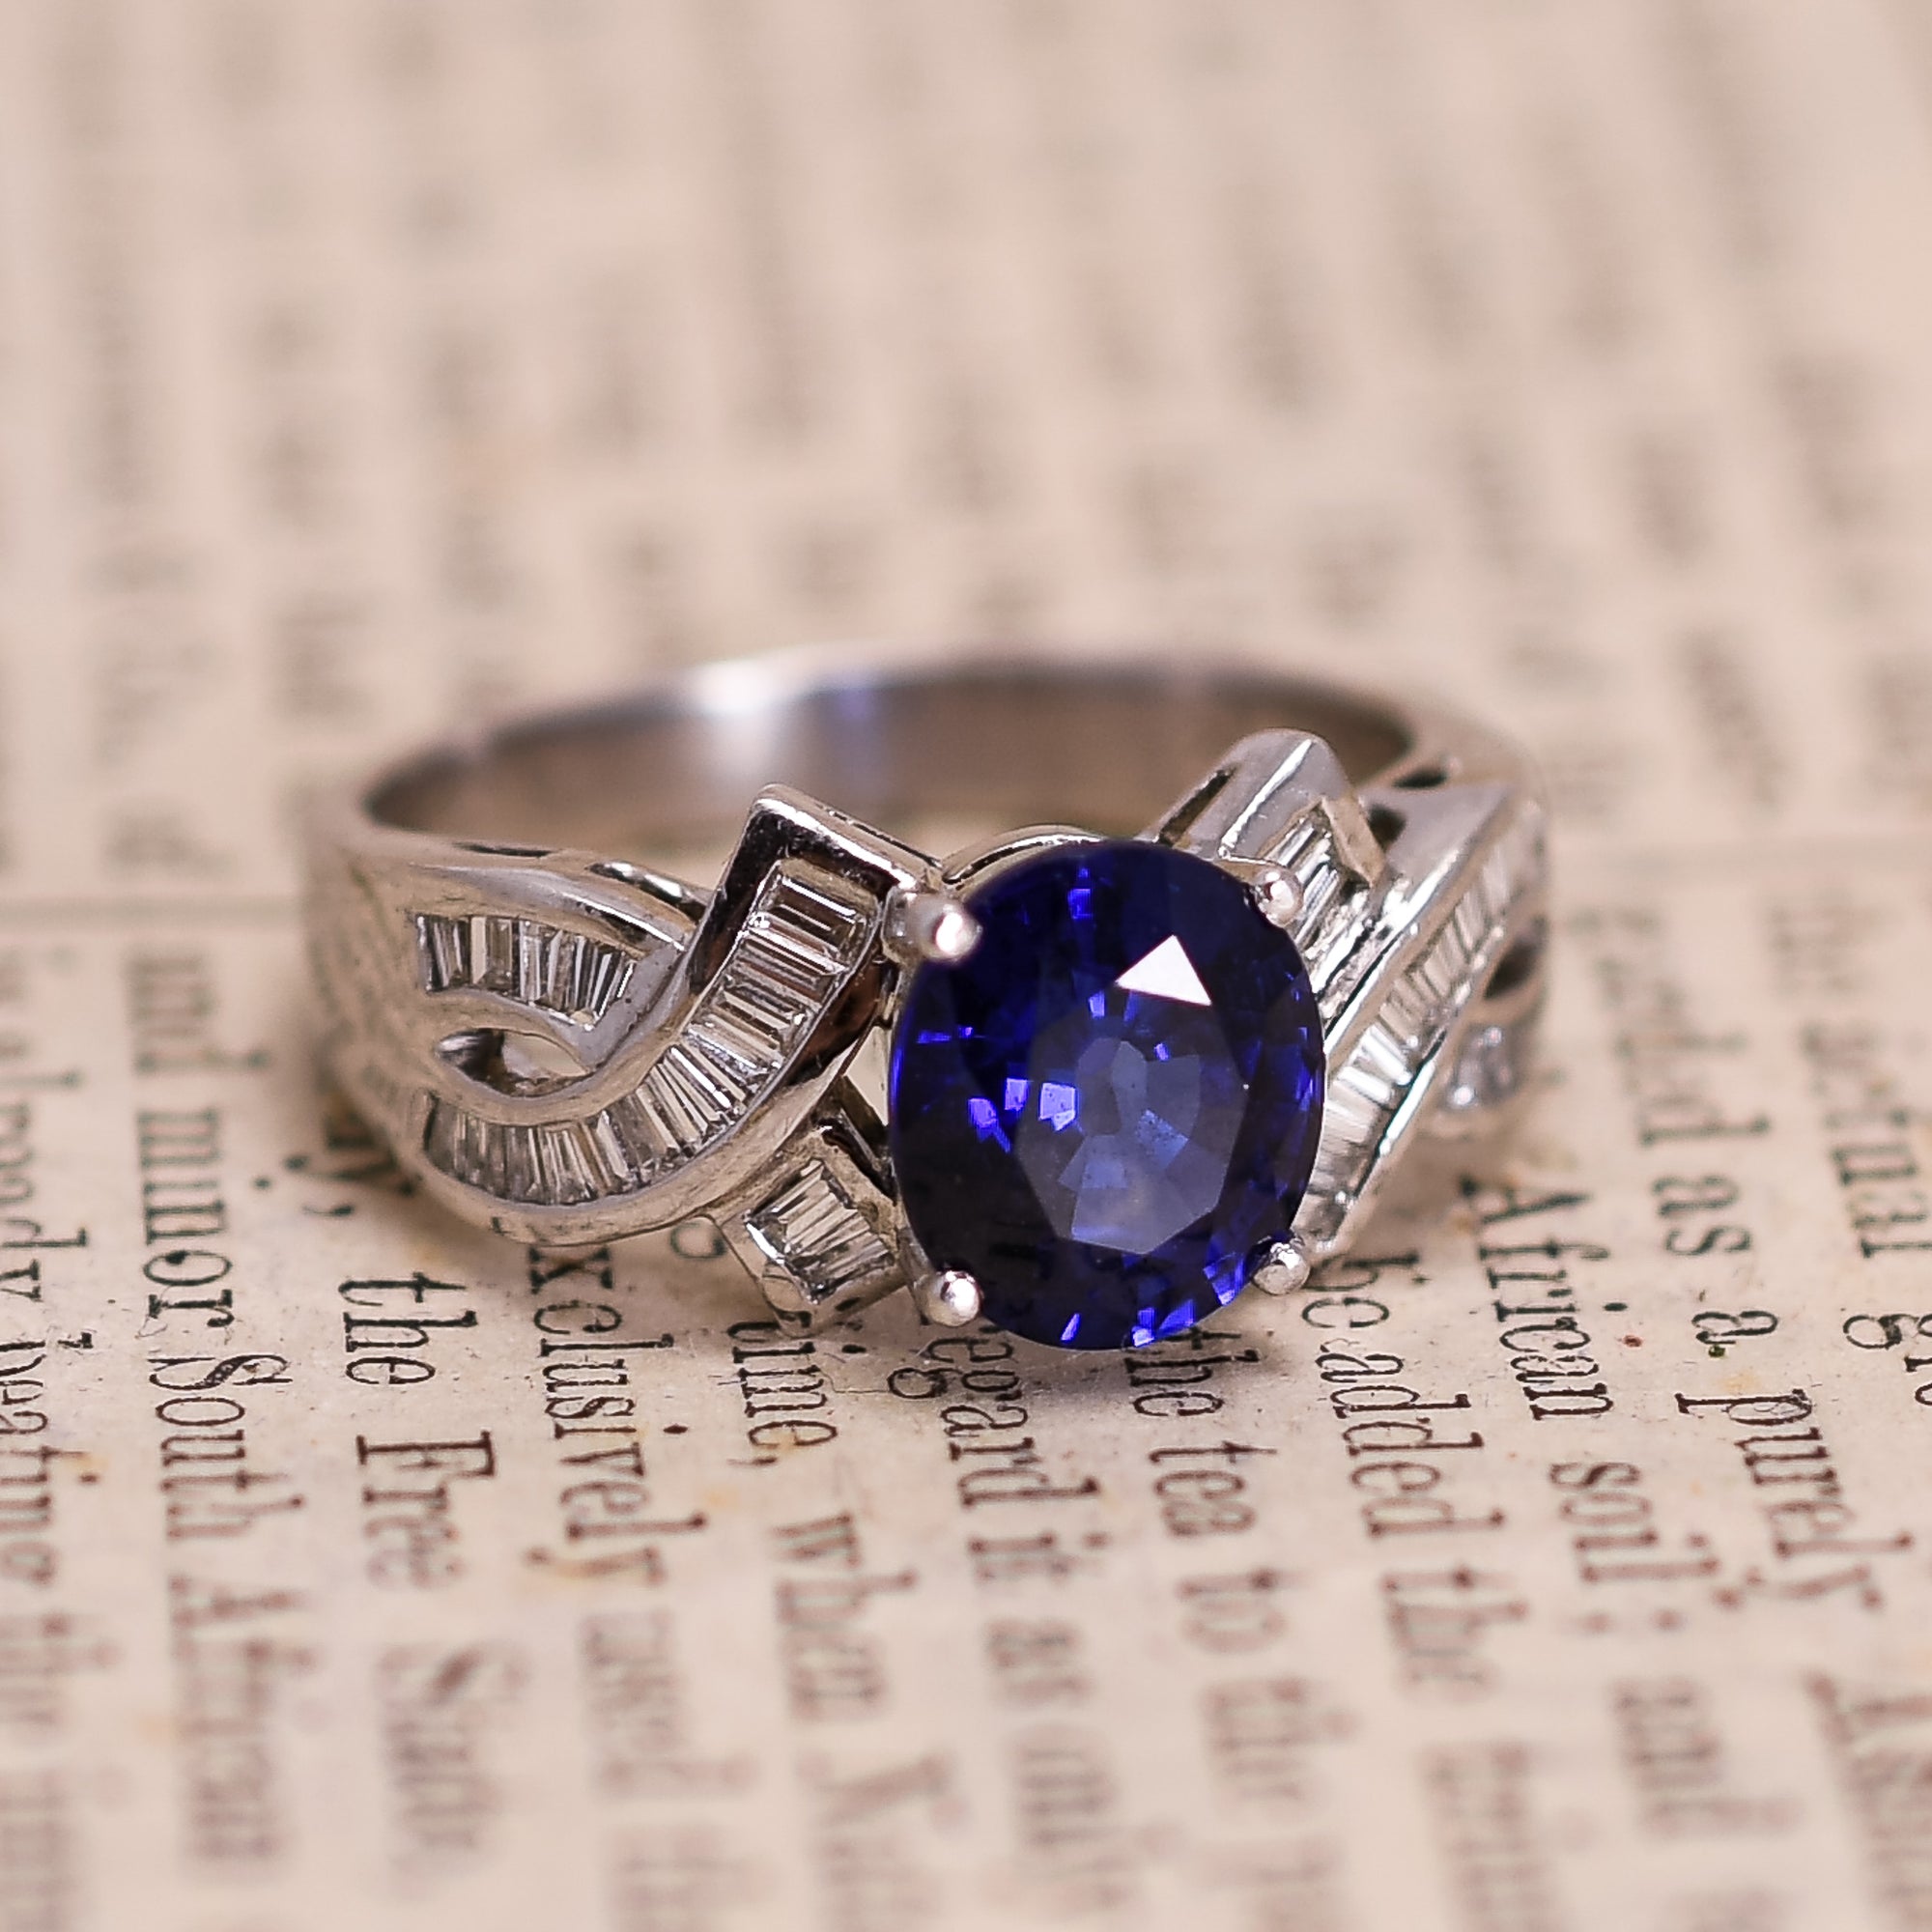 Beautiful Vintage-Inspired Engagement Rings